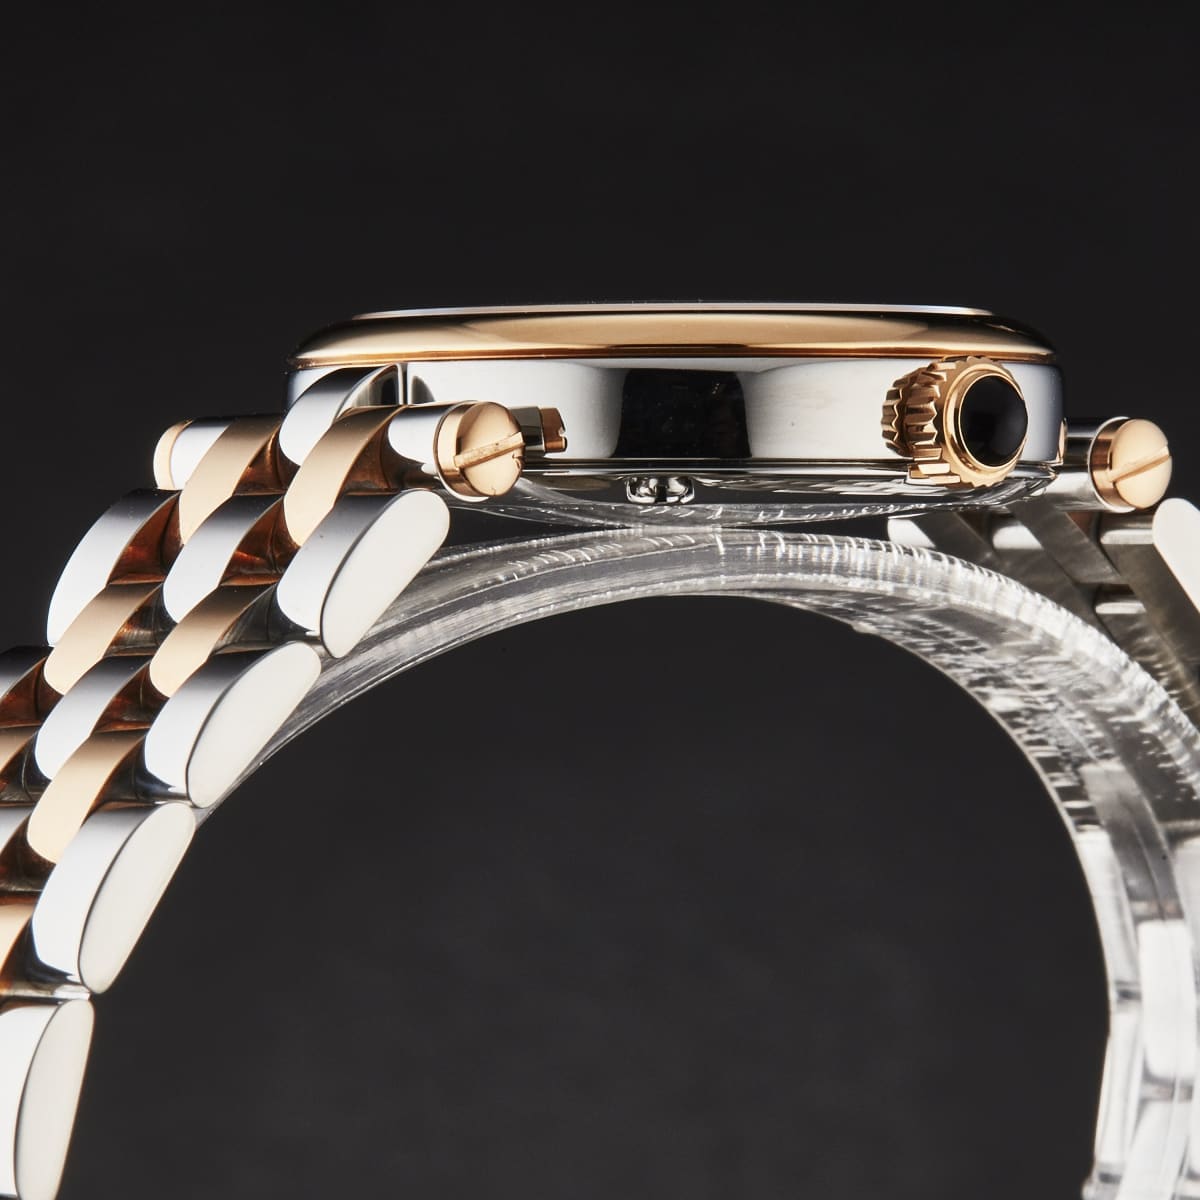 Louis Erard Women’s ’Romance’ White Dial Two-Tone Stainless Steel Bracelet Swiss Quartz Watch 10800AB40.BMA26 - On sale